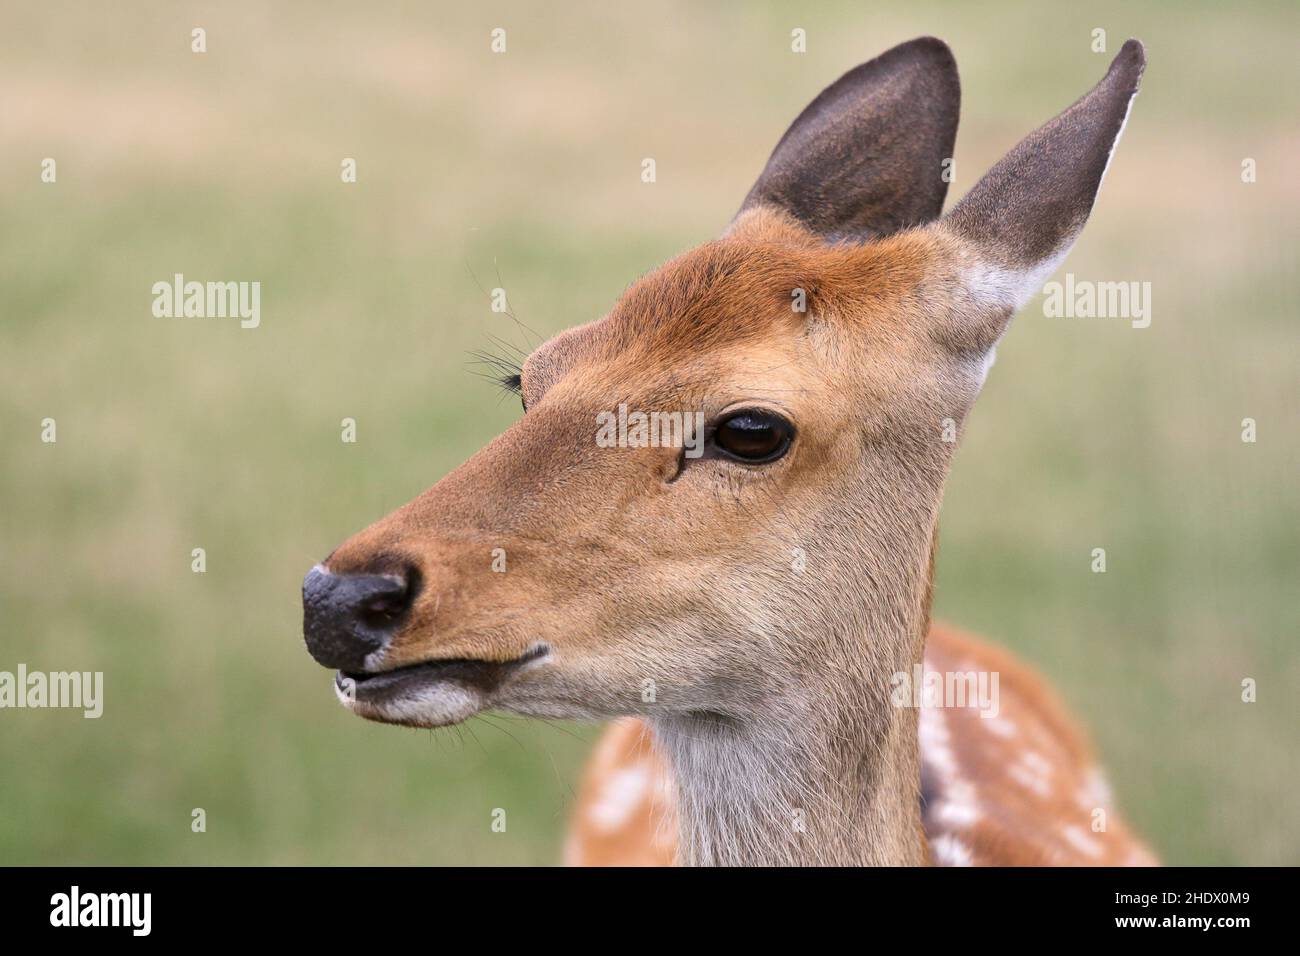 sikawild, female sika deer Stock Photo